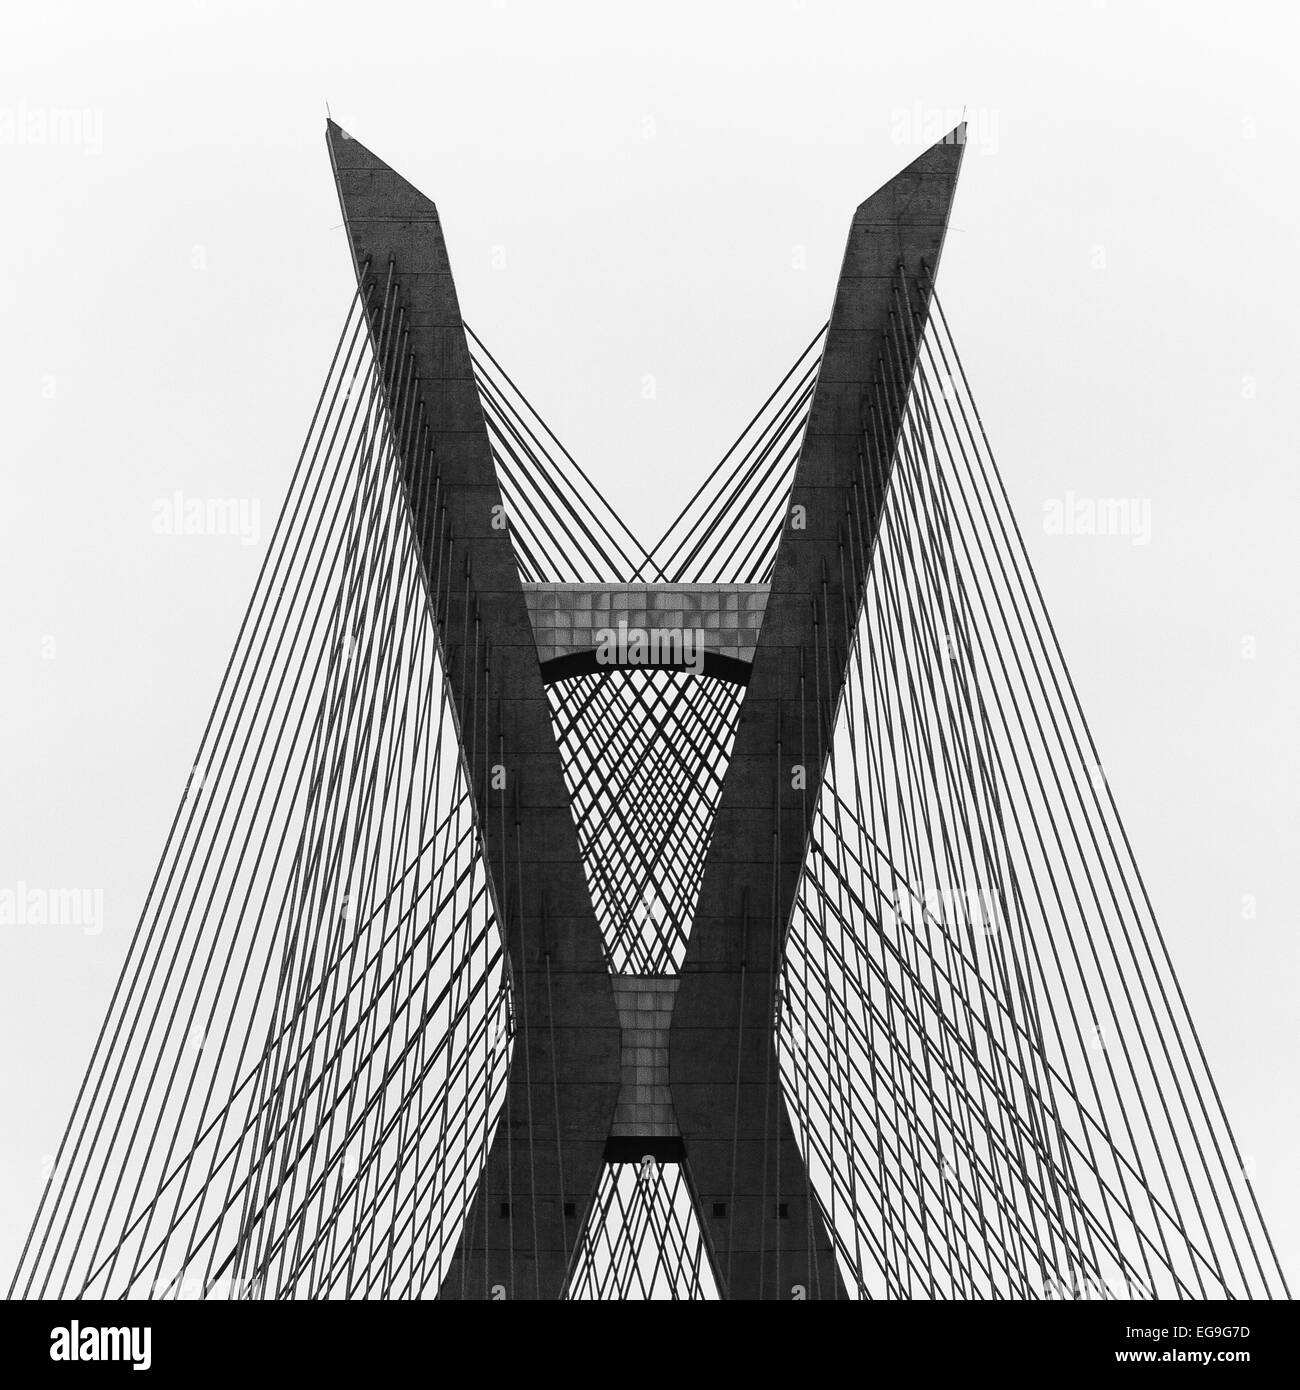 Brazil, Sao Paulo State, Sao Paulo, Estaiada Bridge Stock Photo